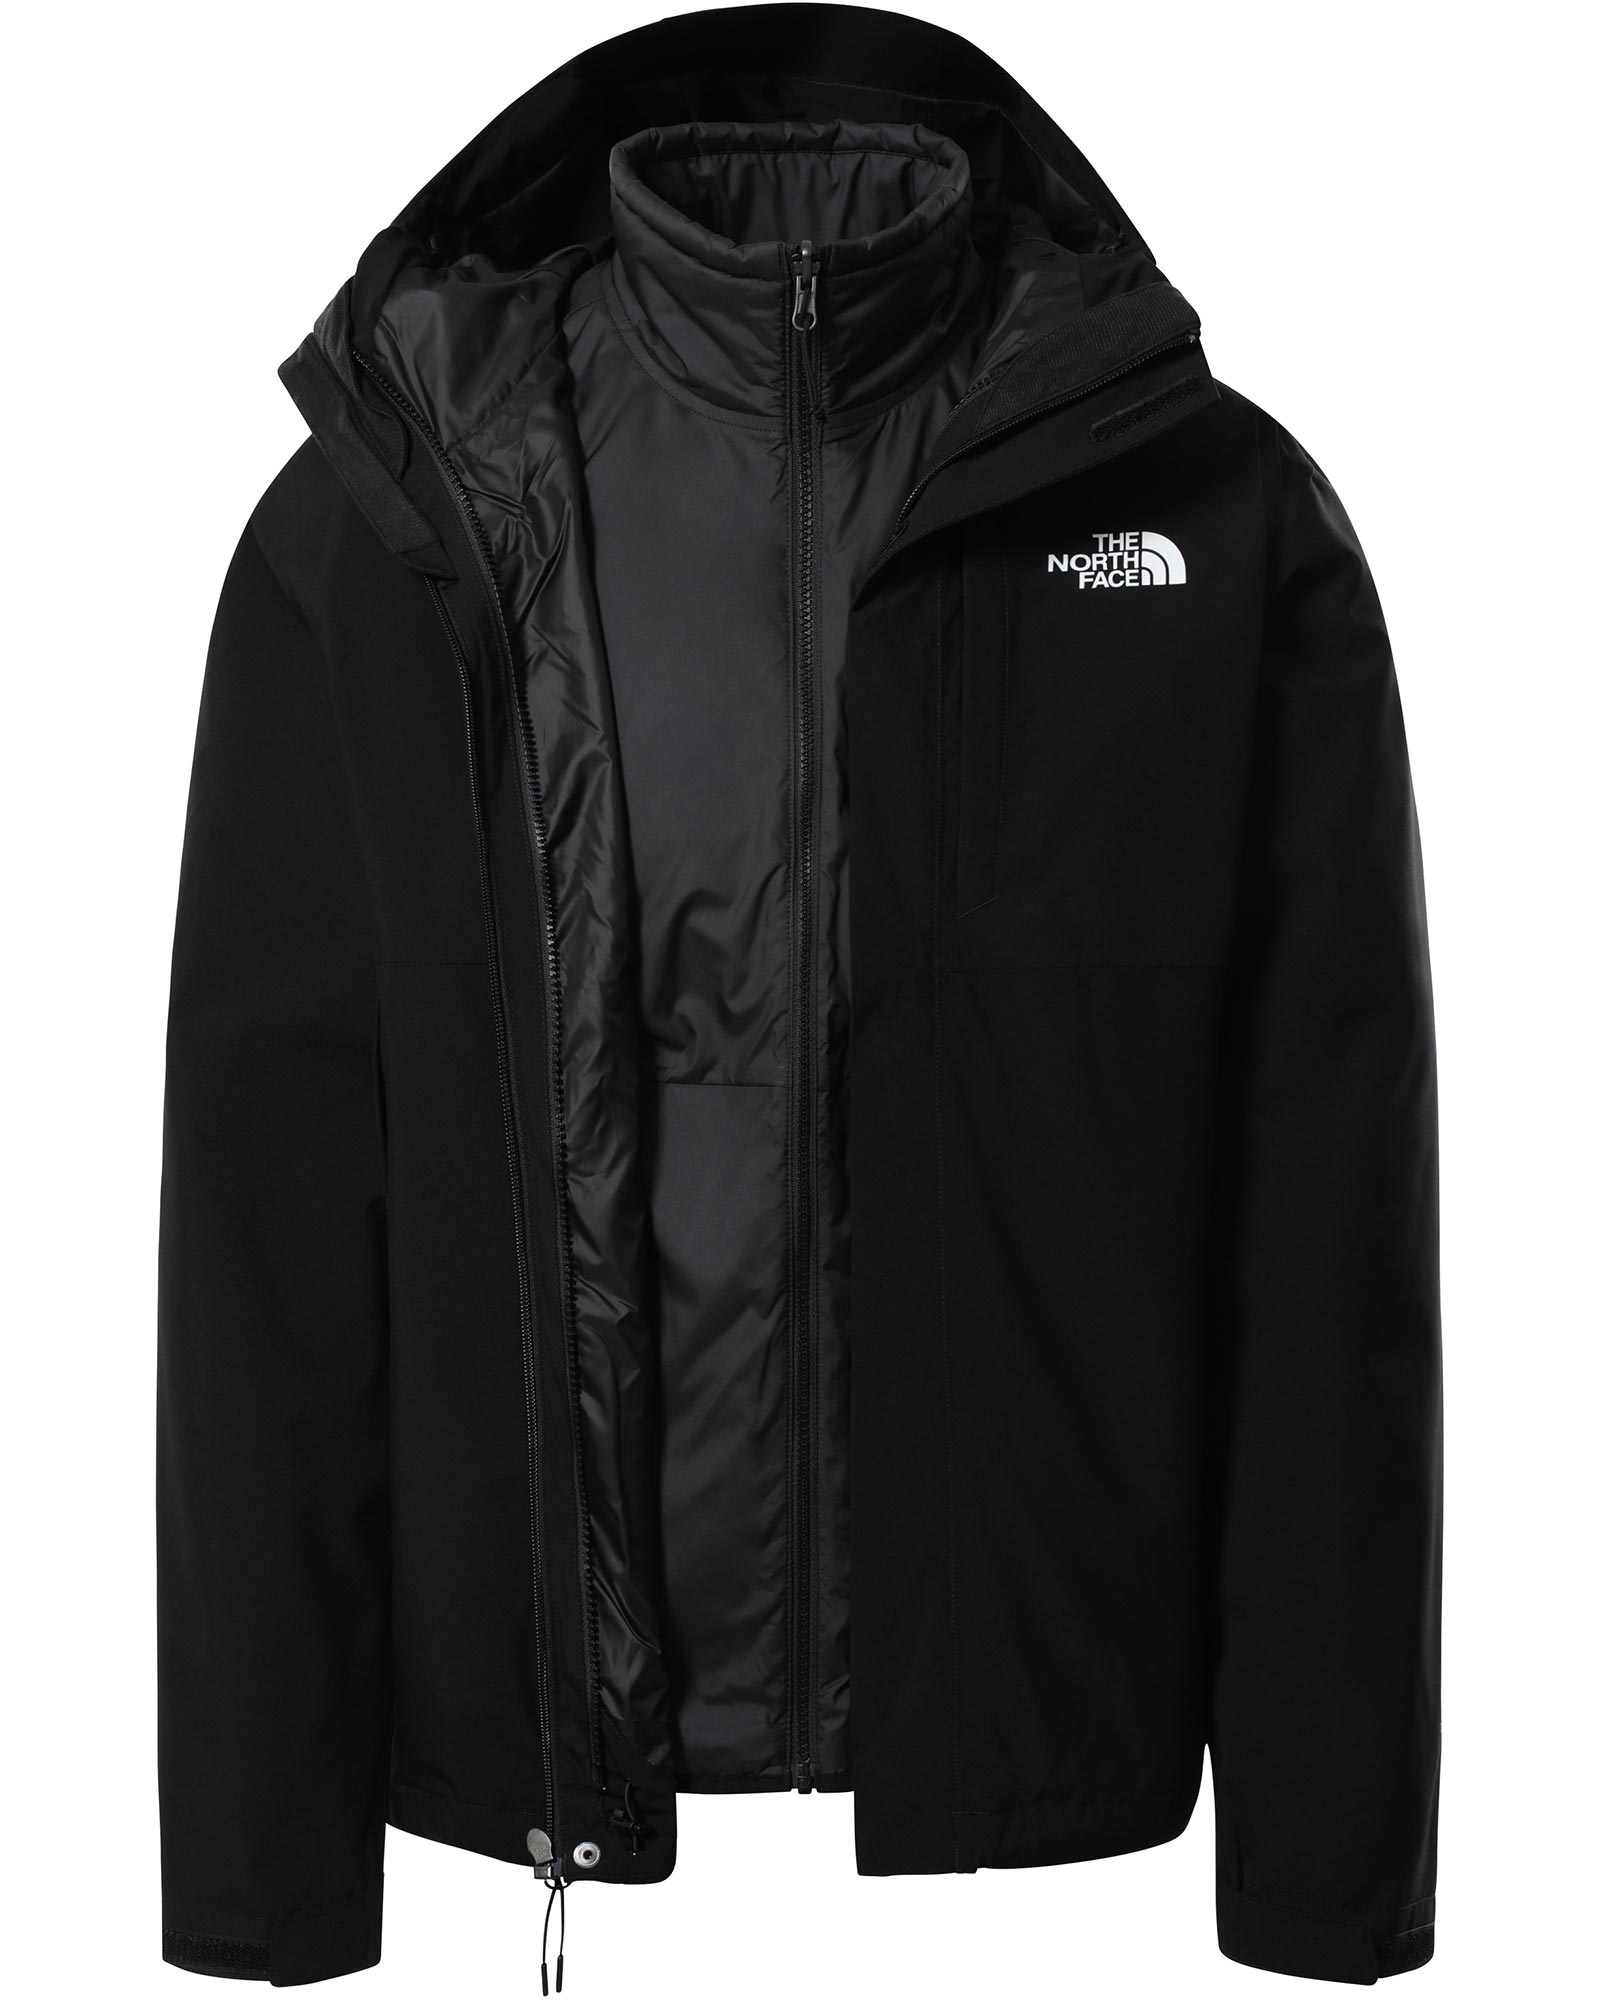 The North Face Carto Men’s Triclimate Jacket - TNF Black L